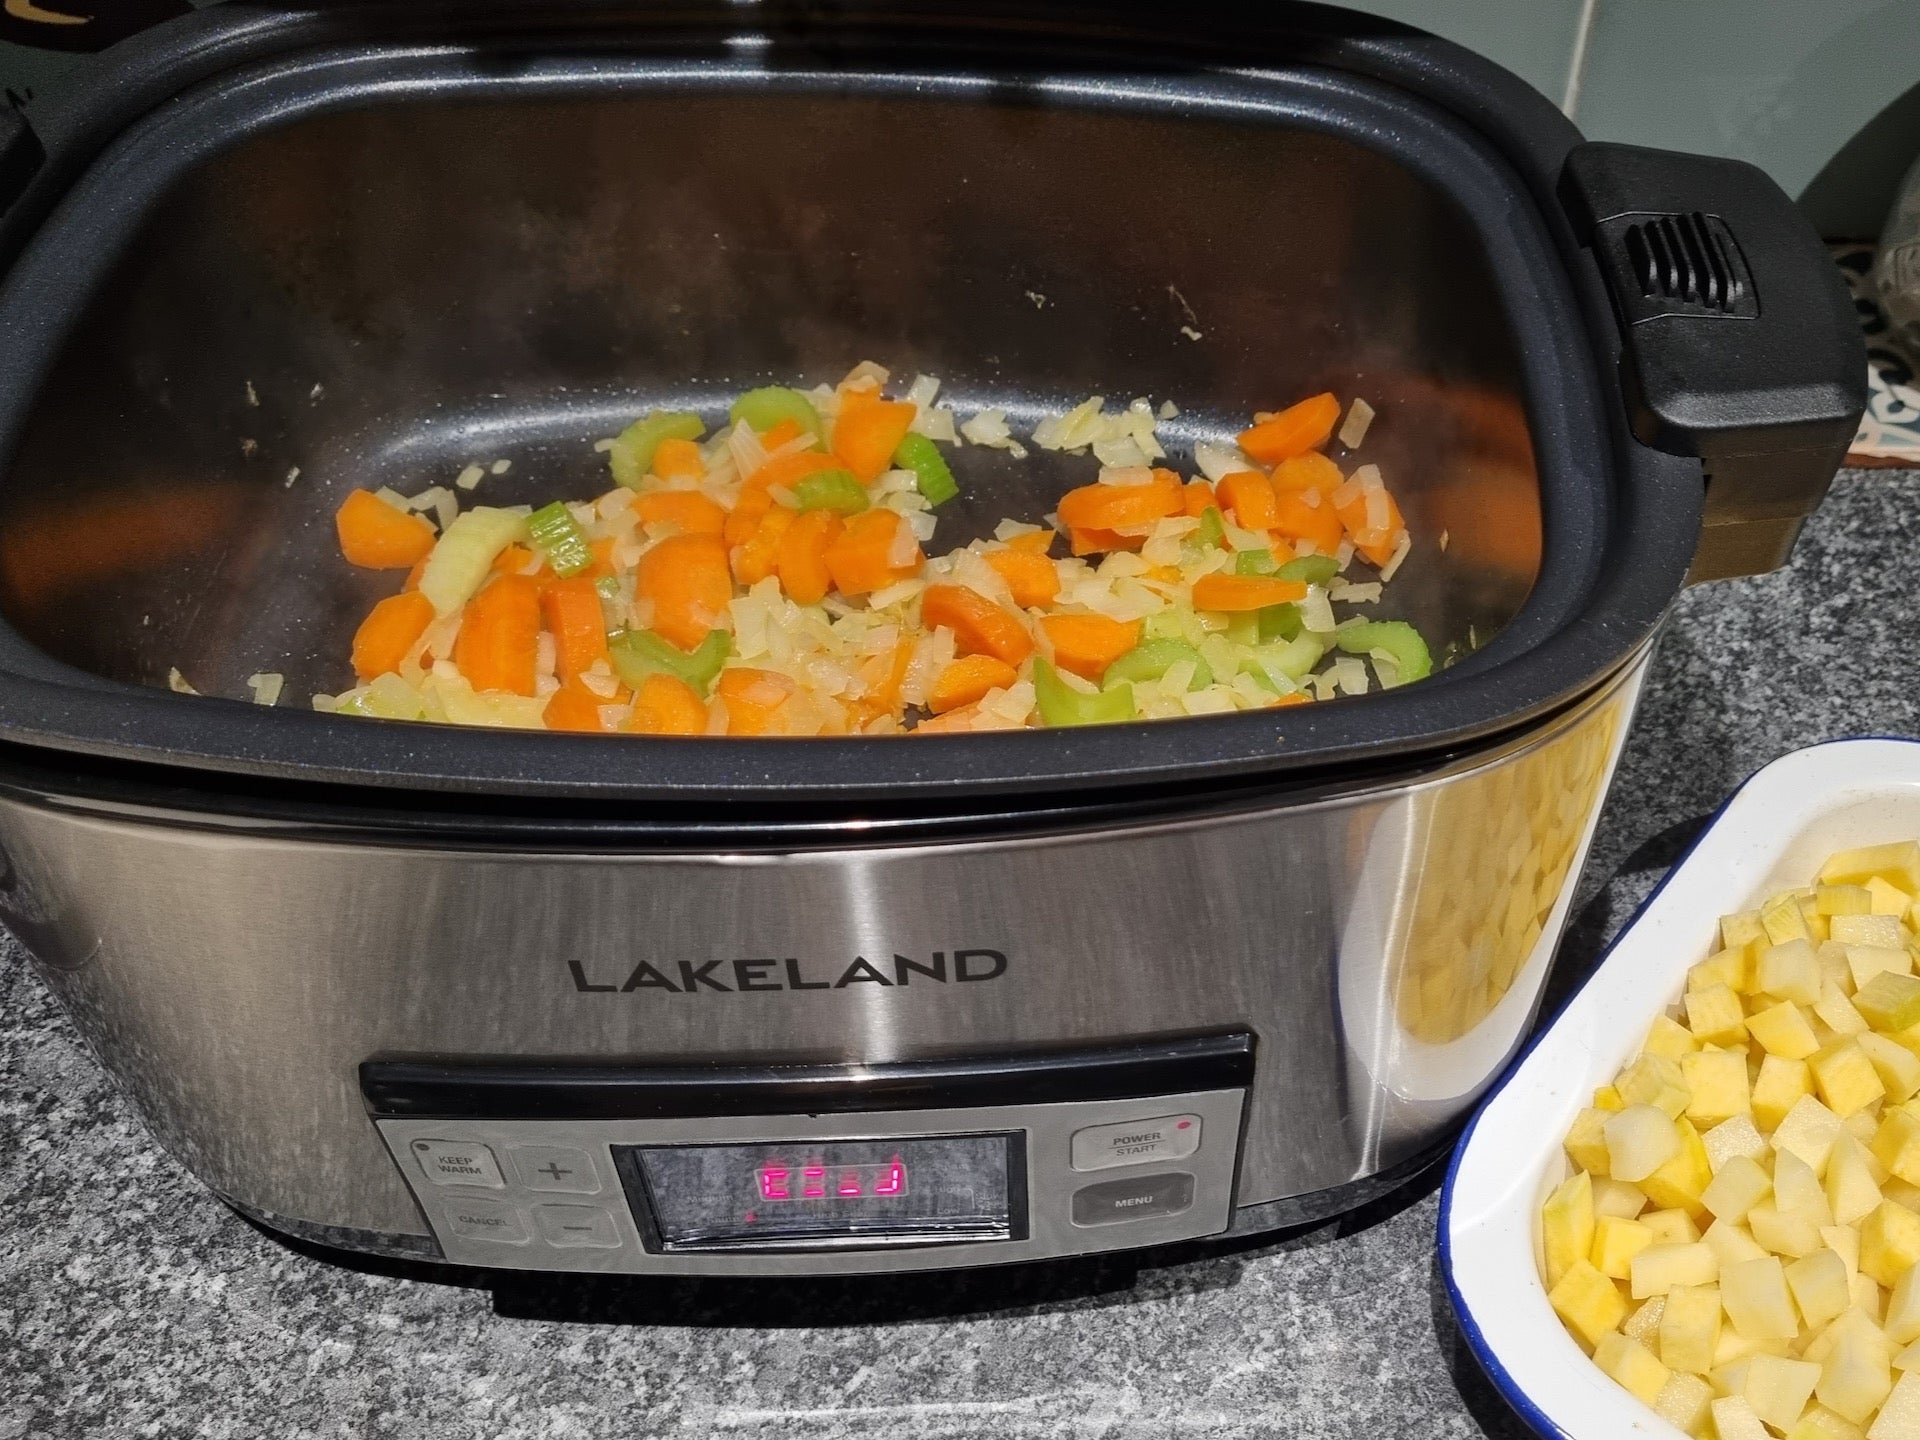 Lakeland 6.5L Searing Slow Cooker cooking vegetables